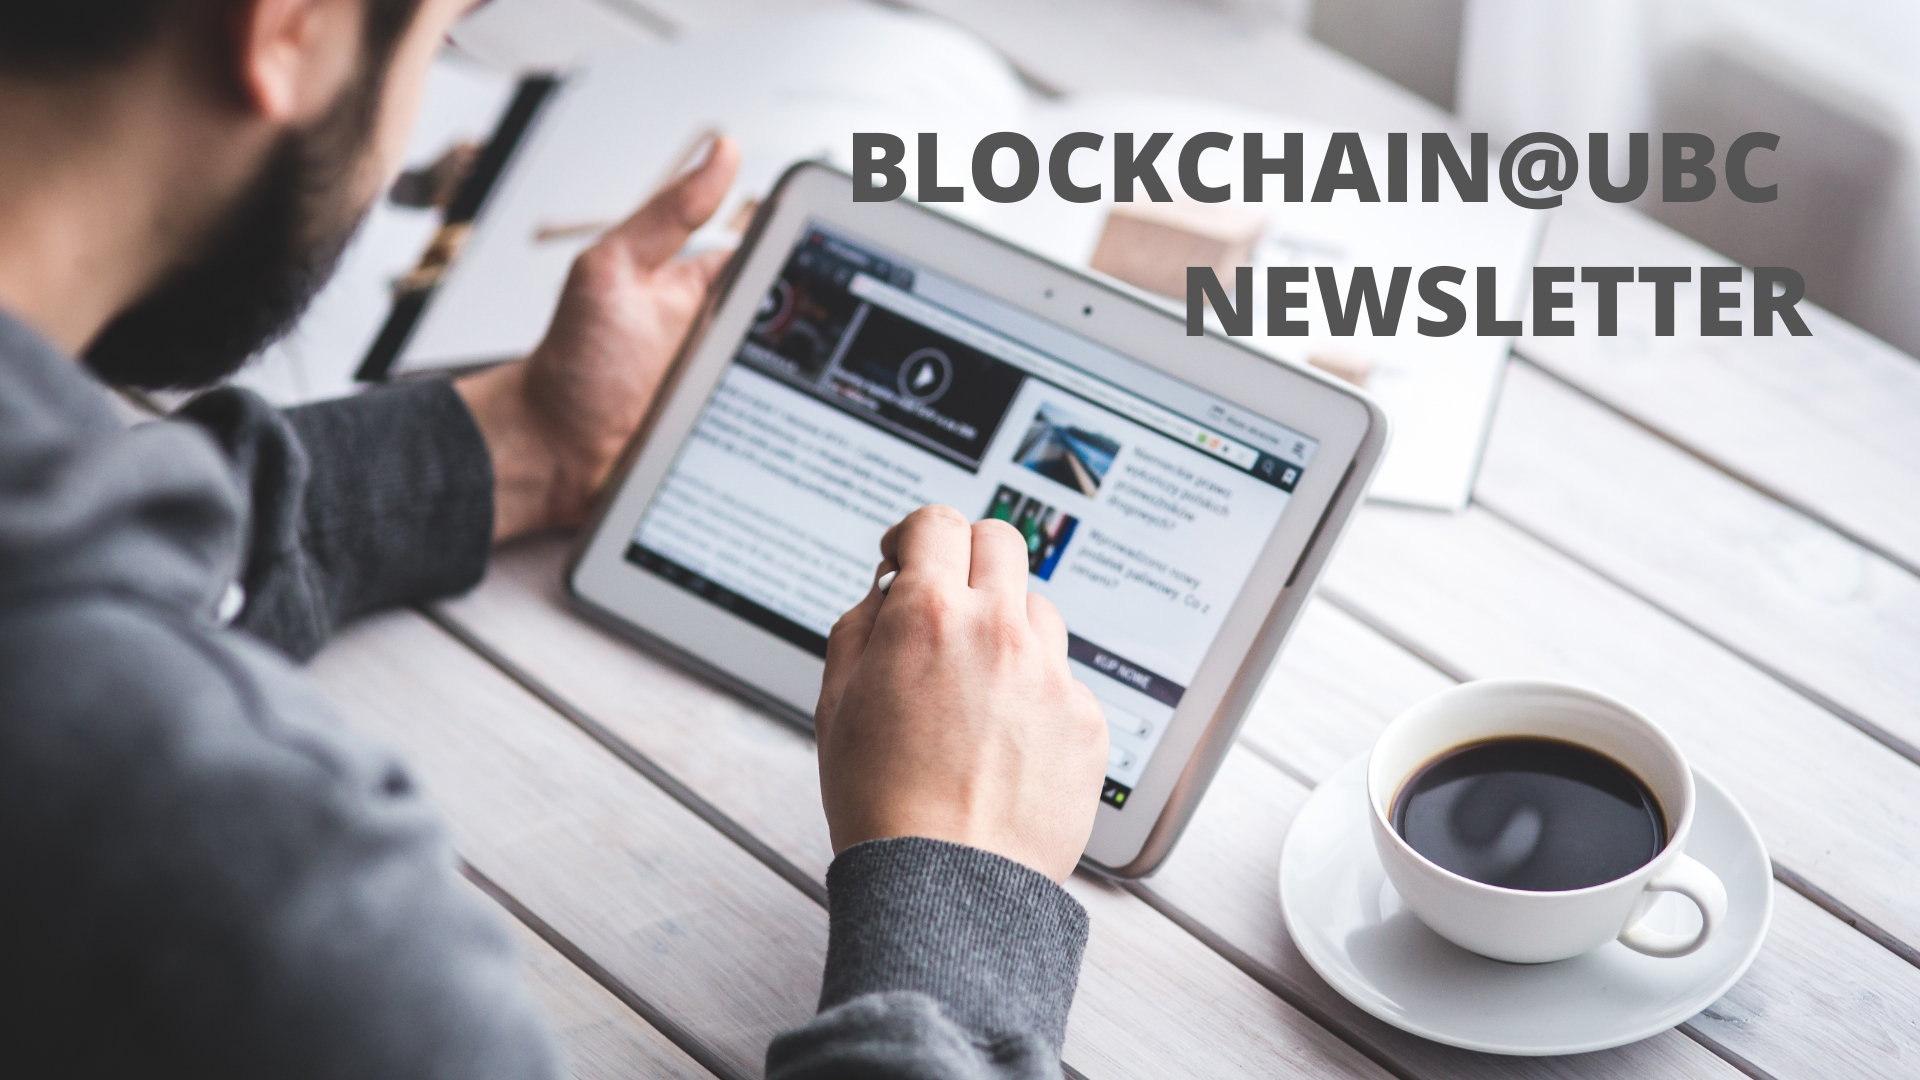 Blockchain@UBC Newsletter